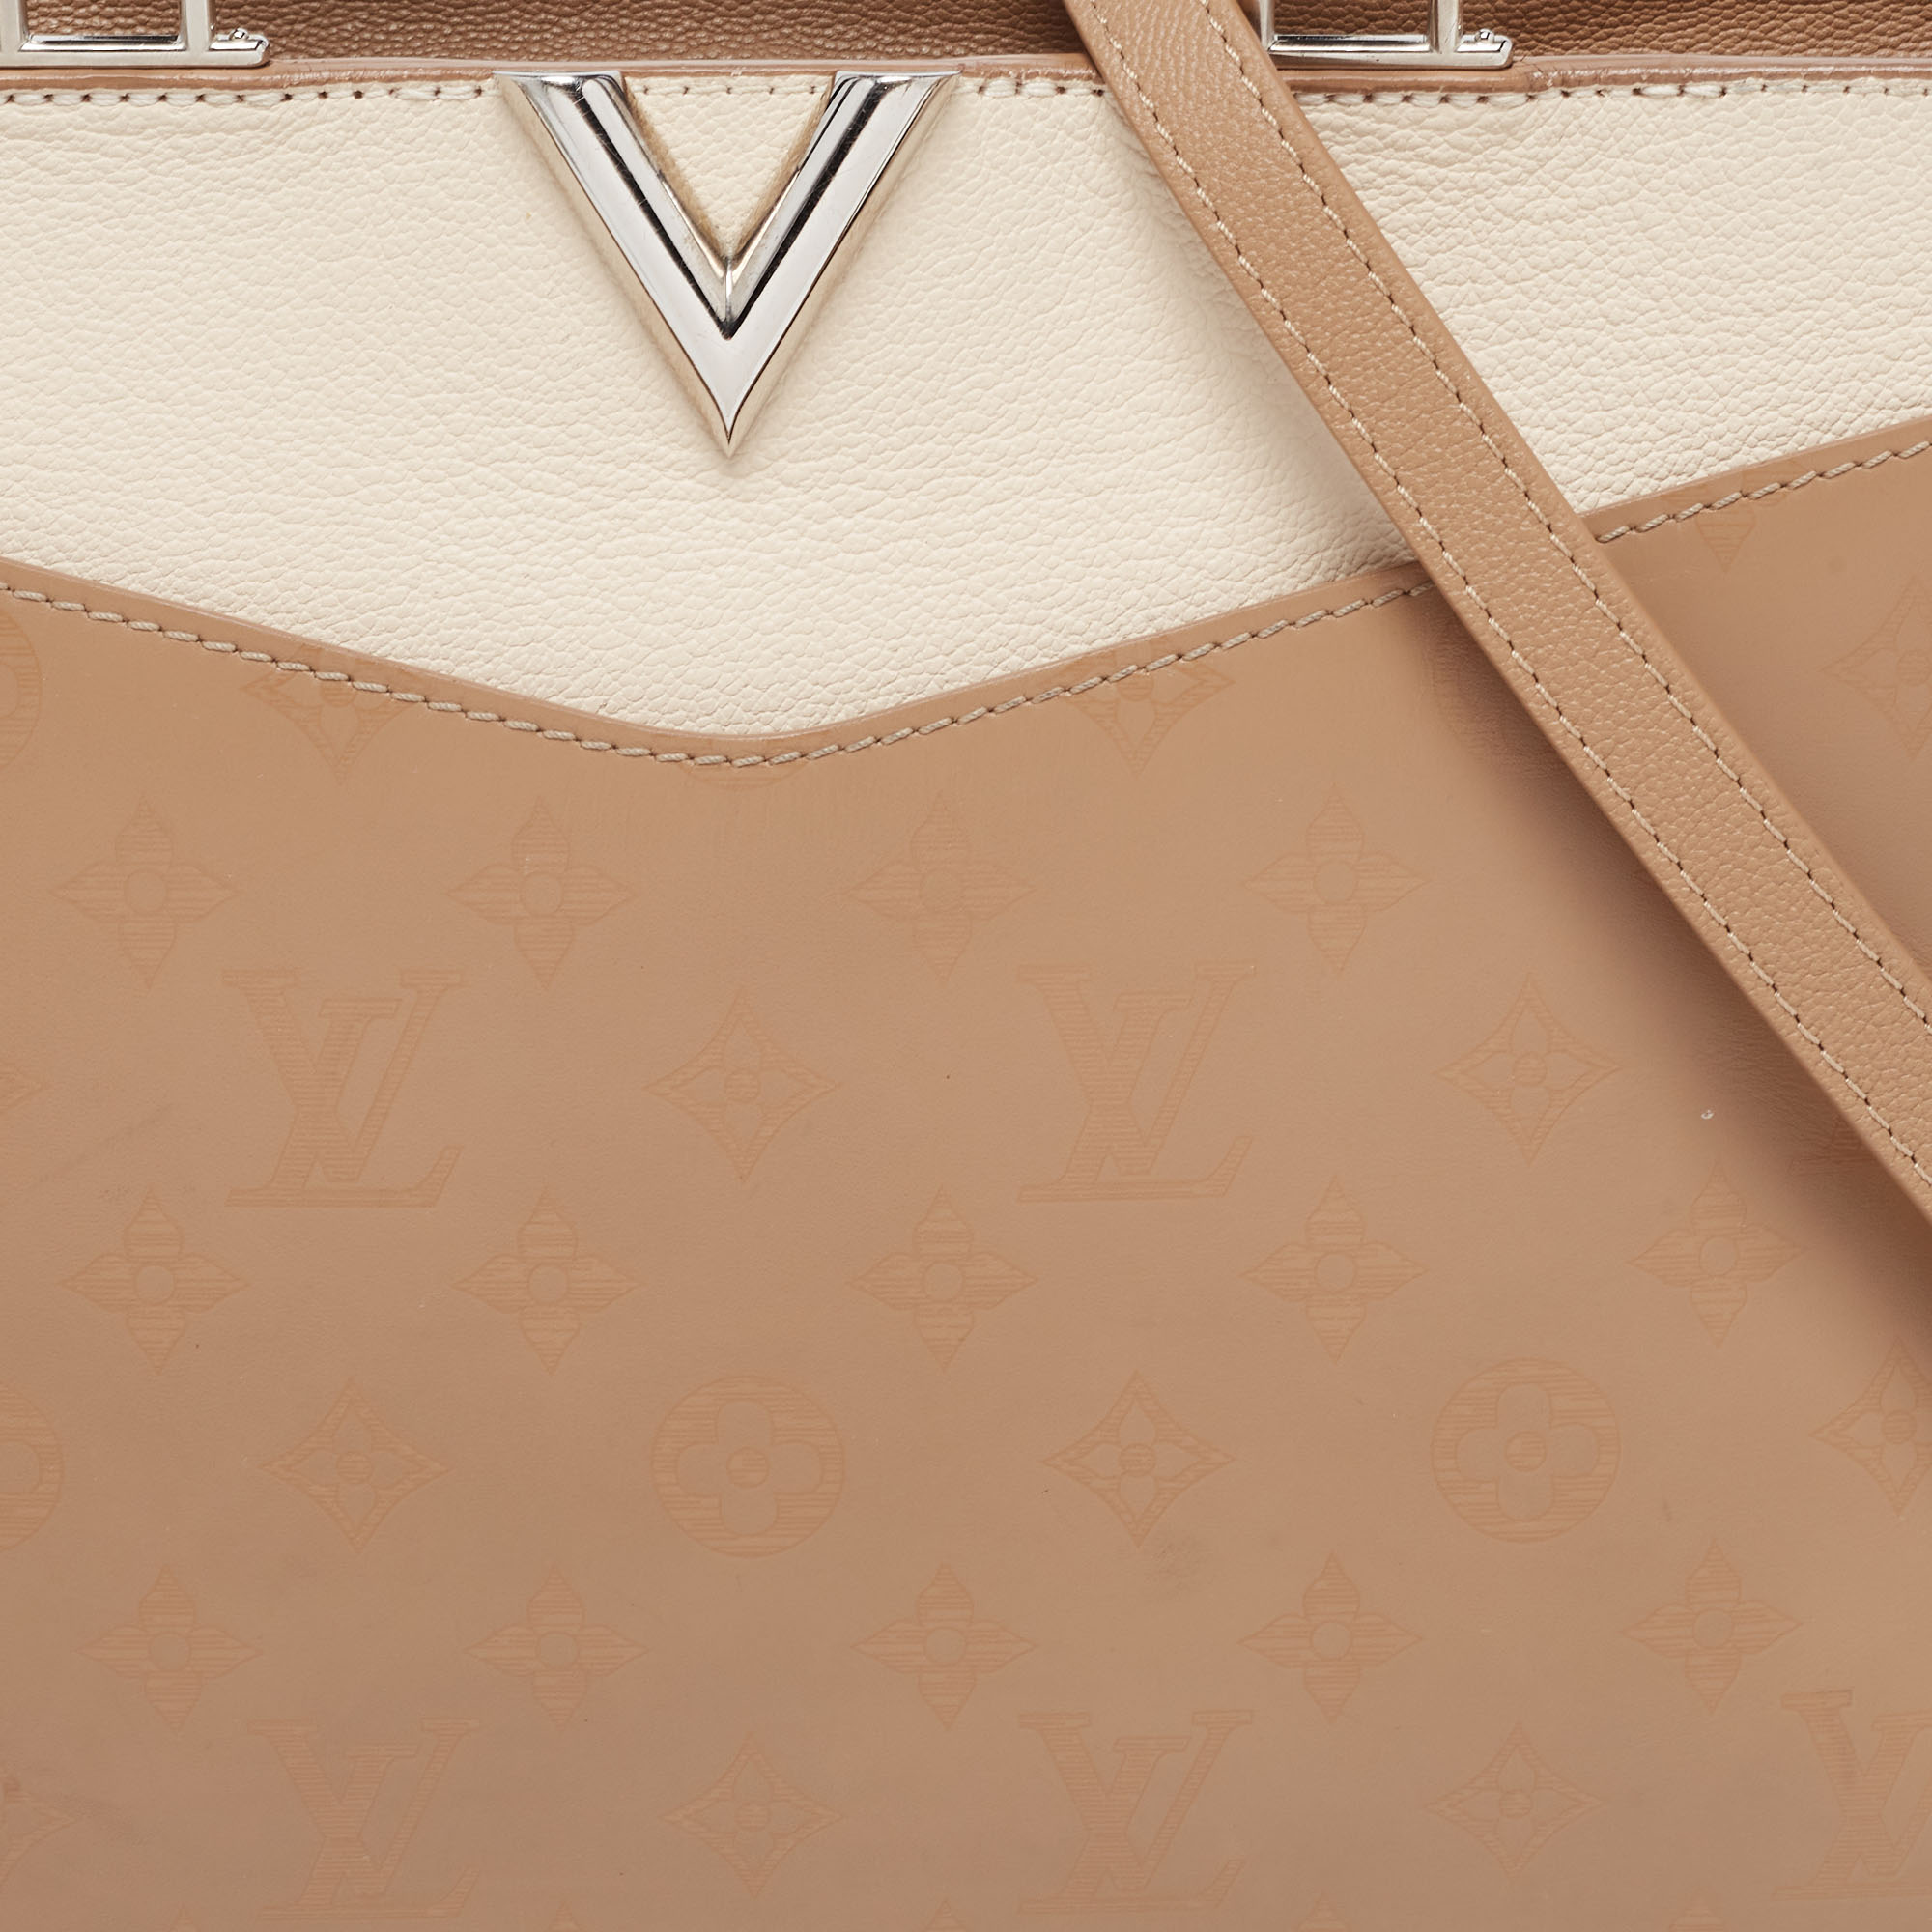 Louis Vuitton Tri Color Leather Monogram Very Zipped Bag